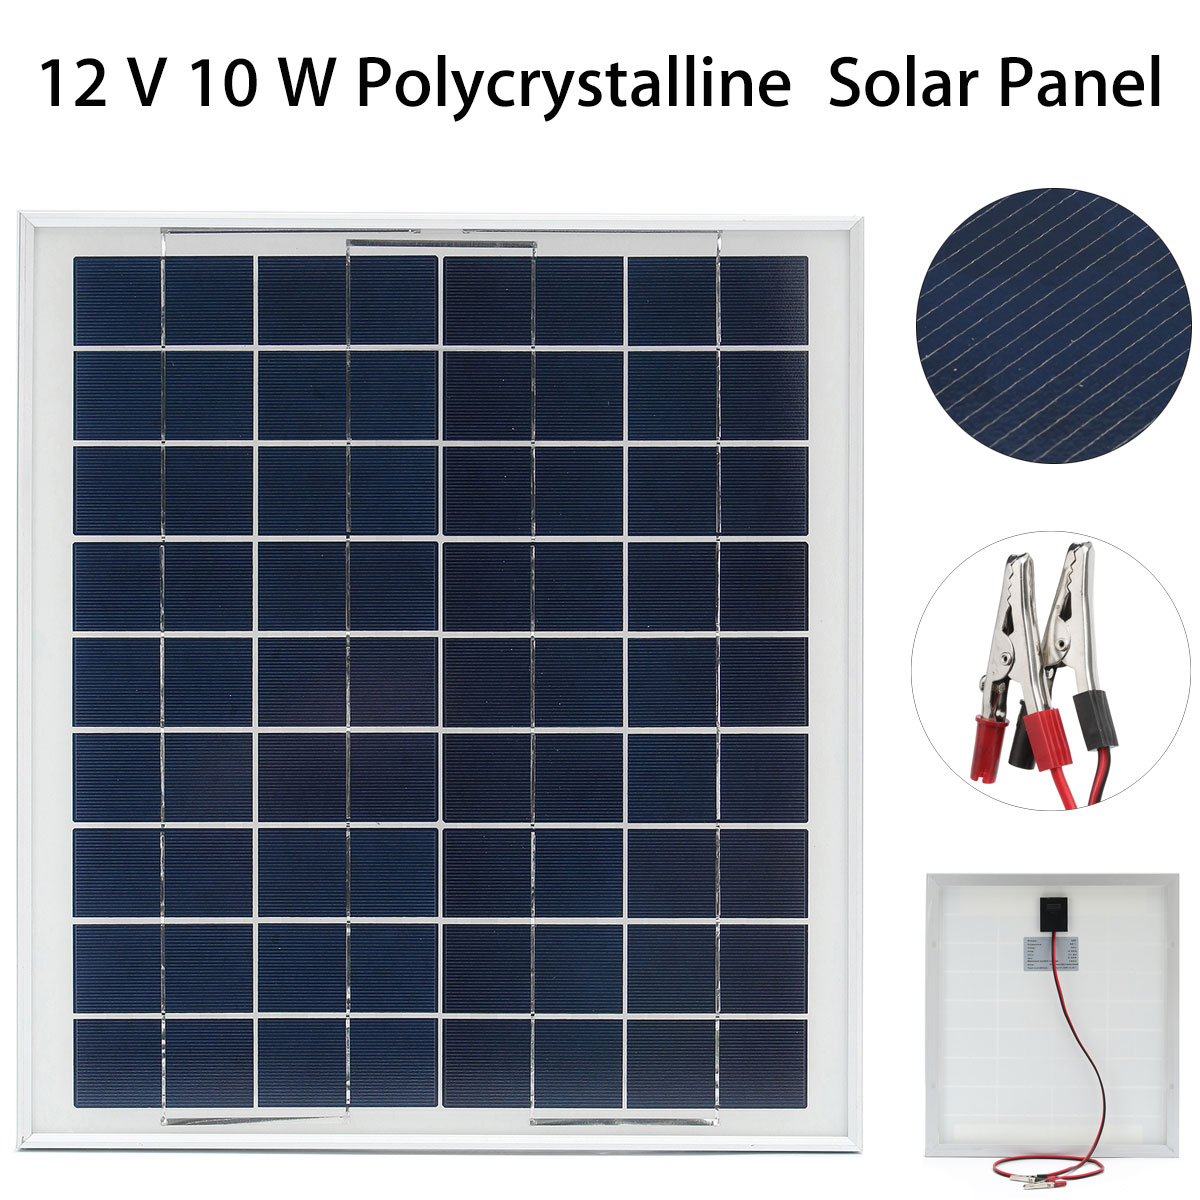 12V 10W Aluminum Alloy Frame Polycrystalline Solar Panel With Junction Box 11